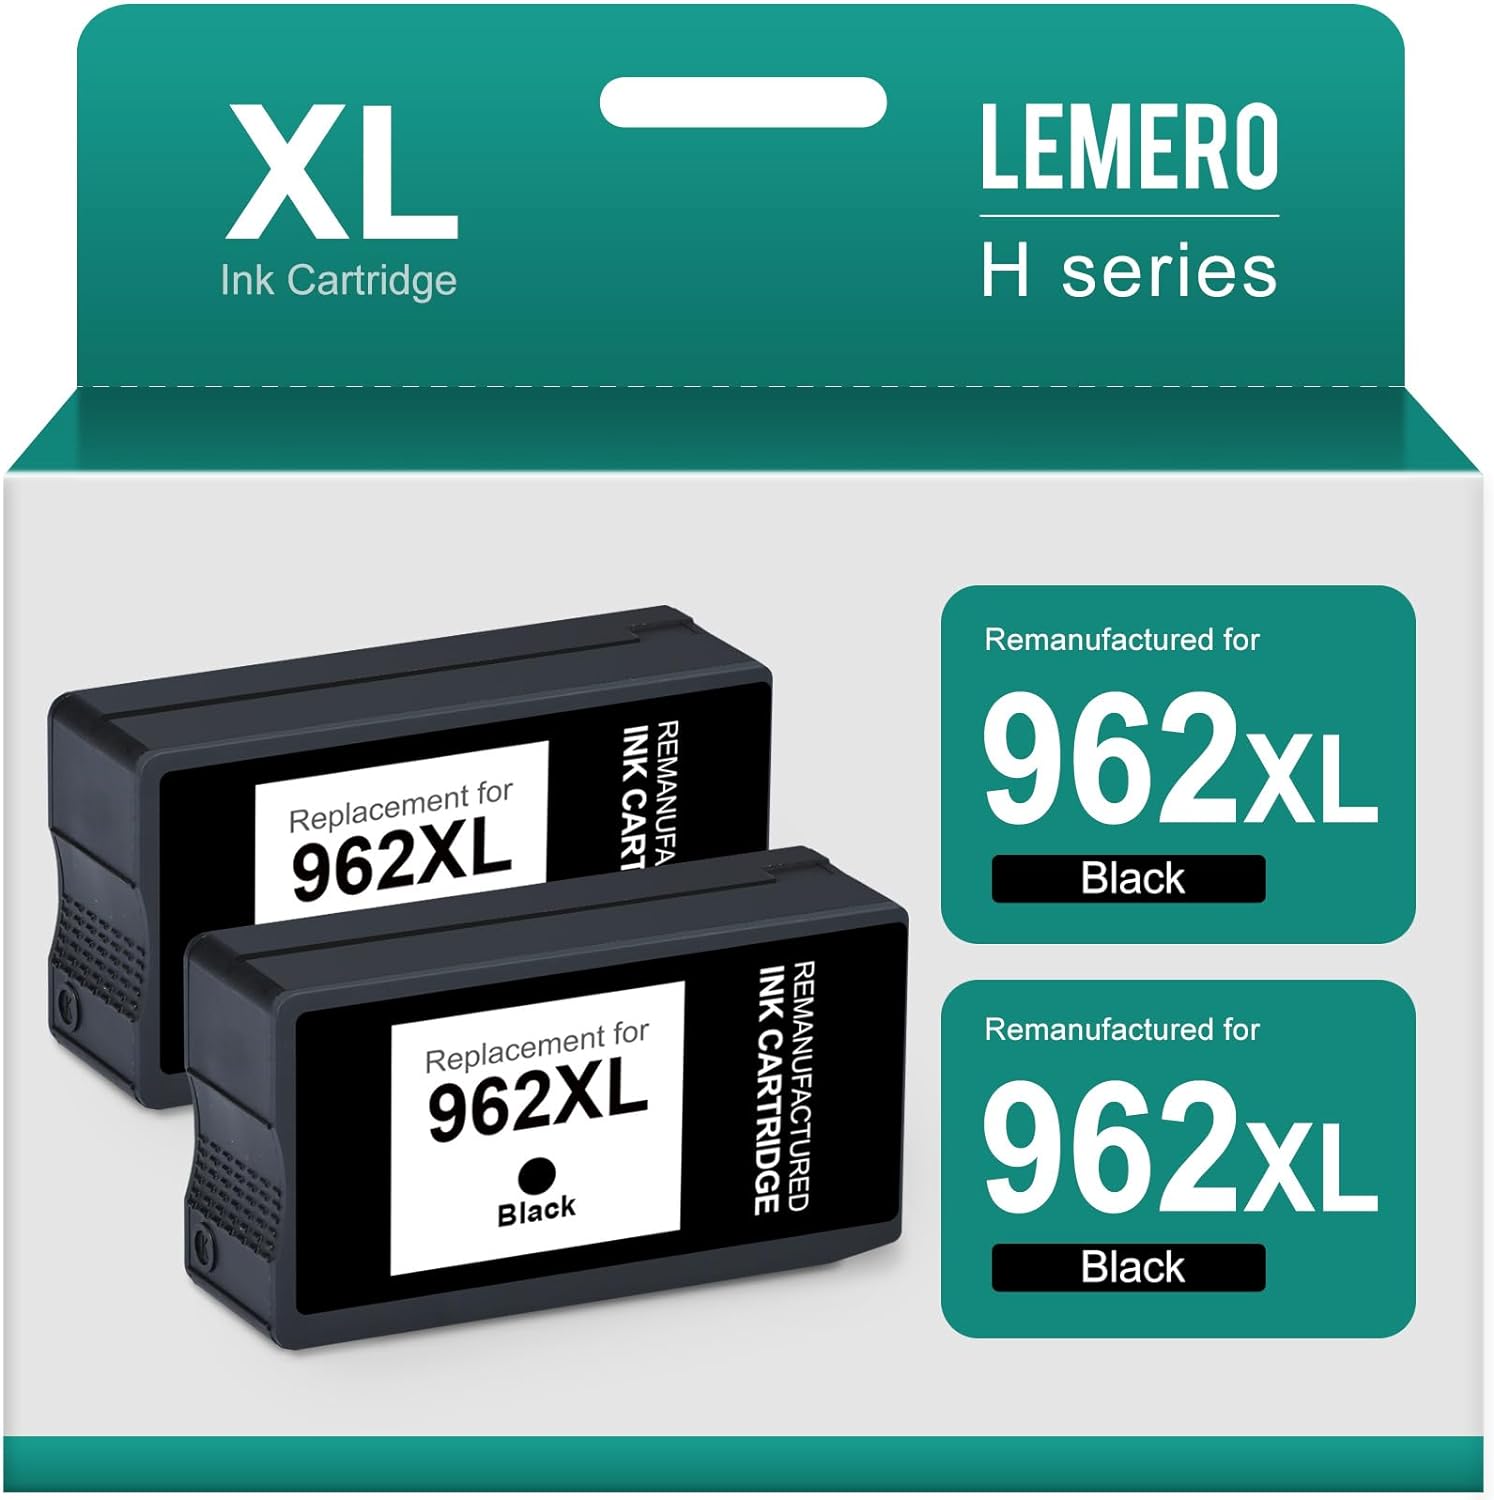 LEMERO 962XL Black Ink Cartridges Replacement for HP 962 XL 962XL Black Ink Cartridges Combo Pack for OfficeJet Pro 9015 9010 9025 9020 9018 9012 9028 Printer (2 Black)